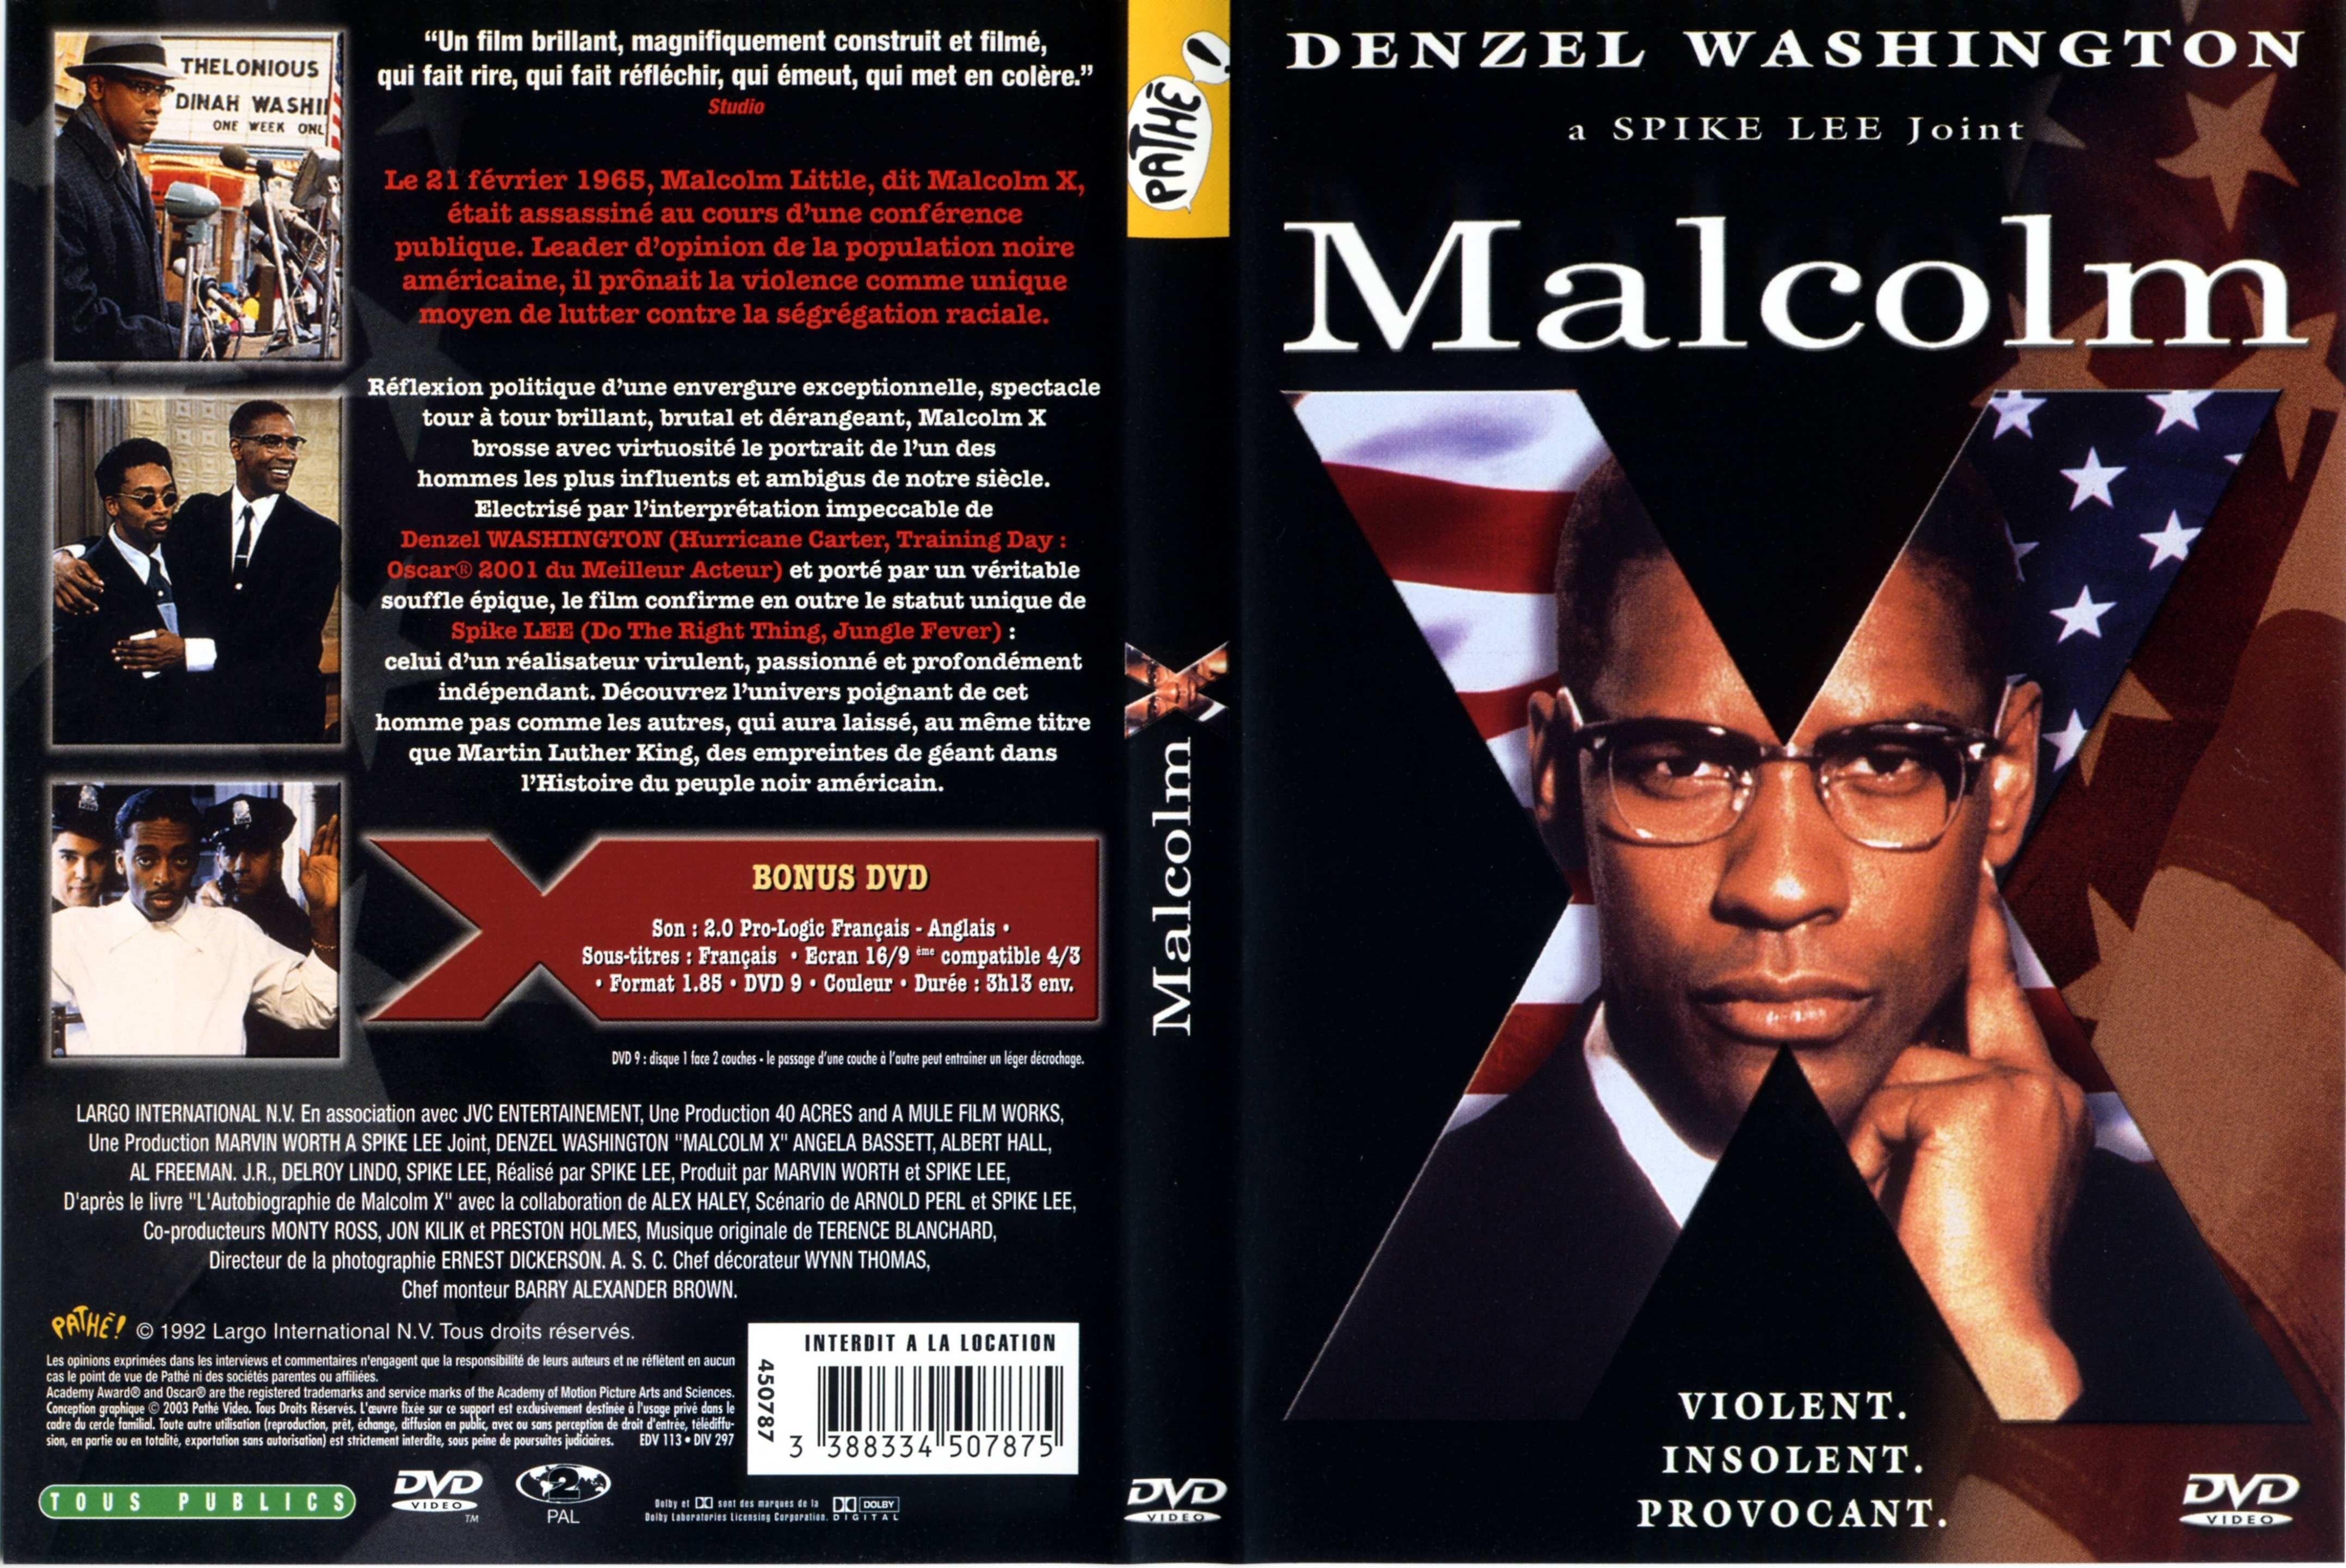 Jaquette DVD Malcolm X v2